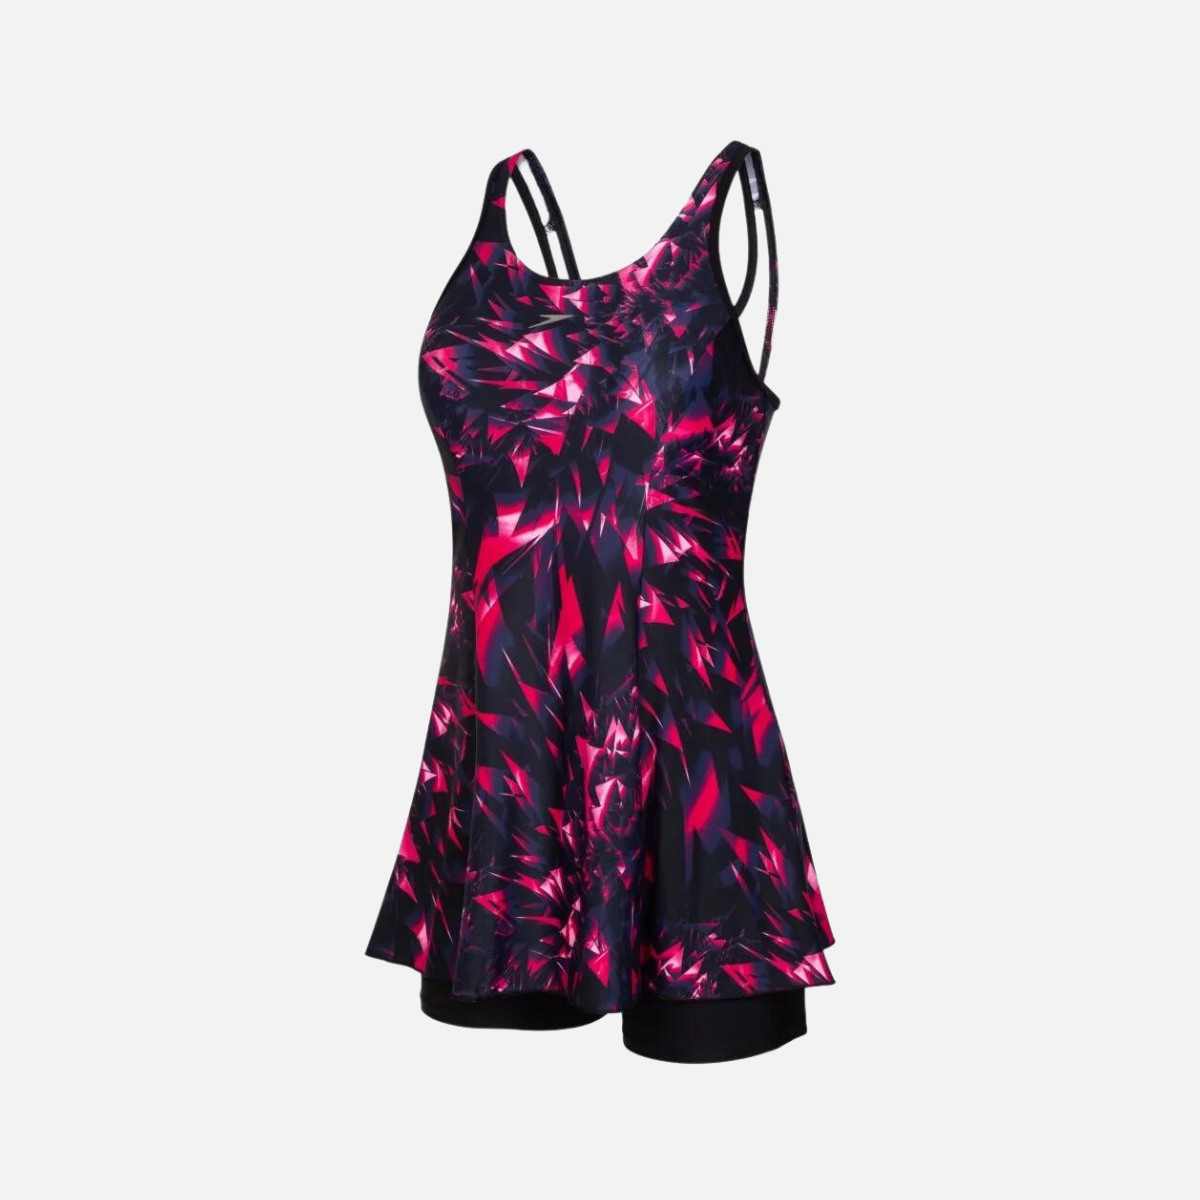 Speedo Allover Print Racerback Women's Swimdress -Black/Jewel Pink/Ecstatic/White